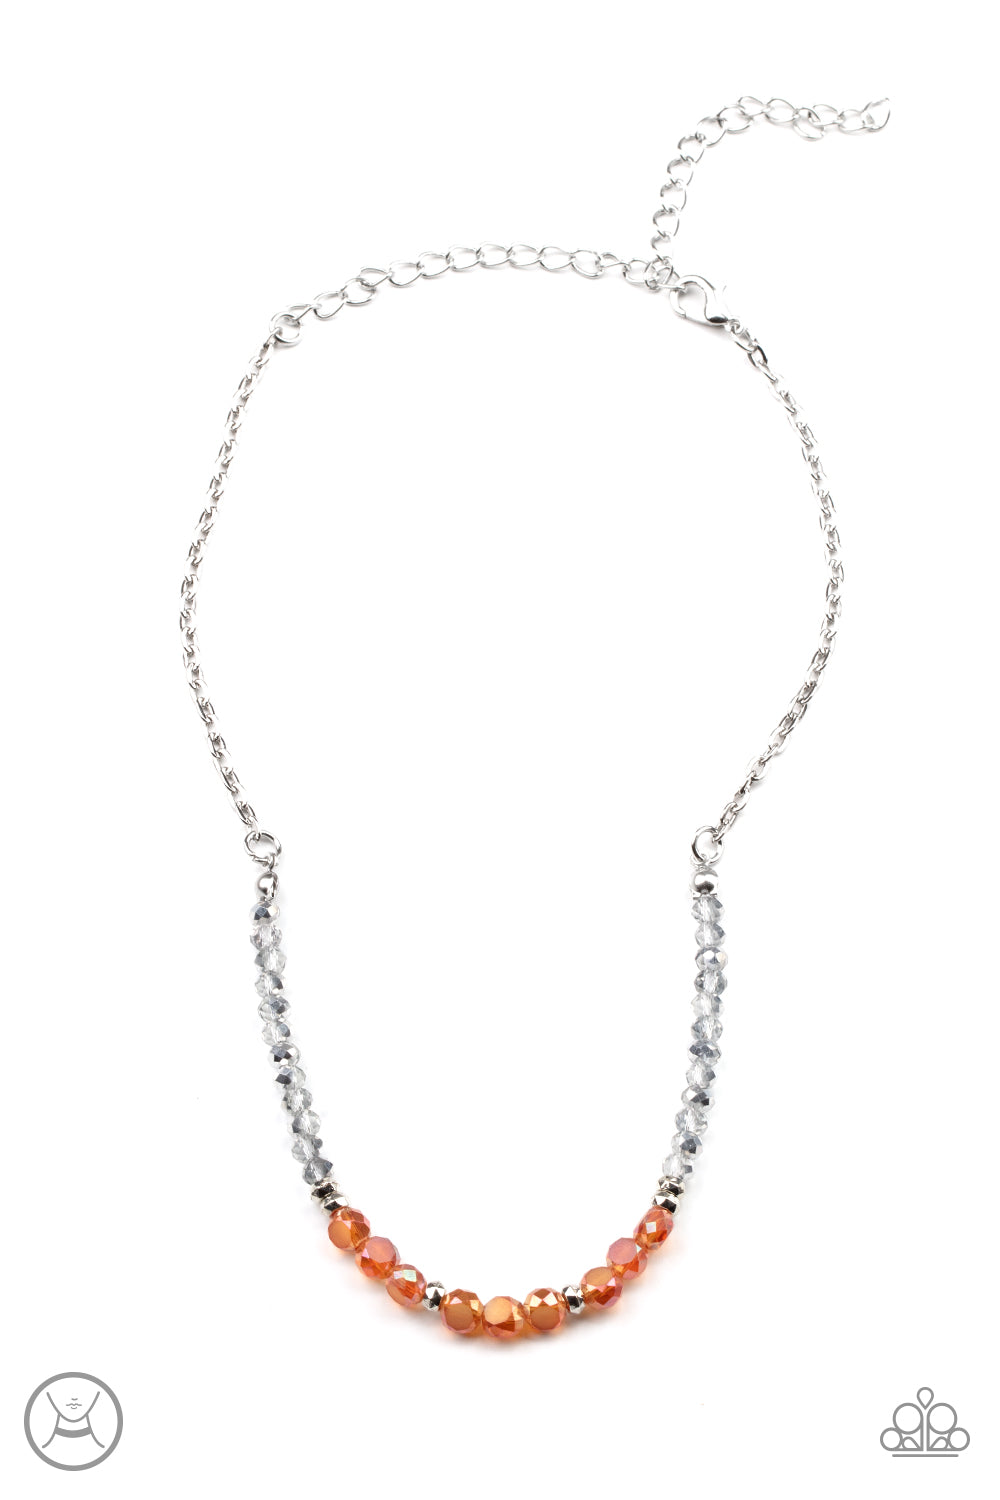 Paparazzi Space Odyssey - Orange Choker Necklace - A Finishing Touch Jewelry